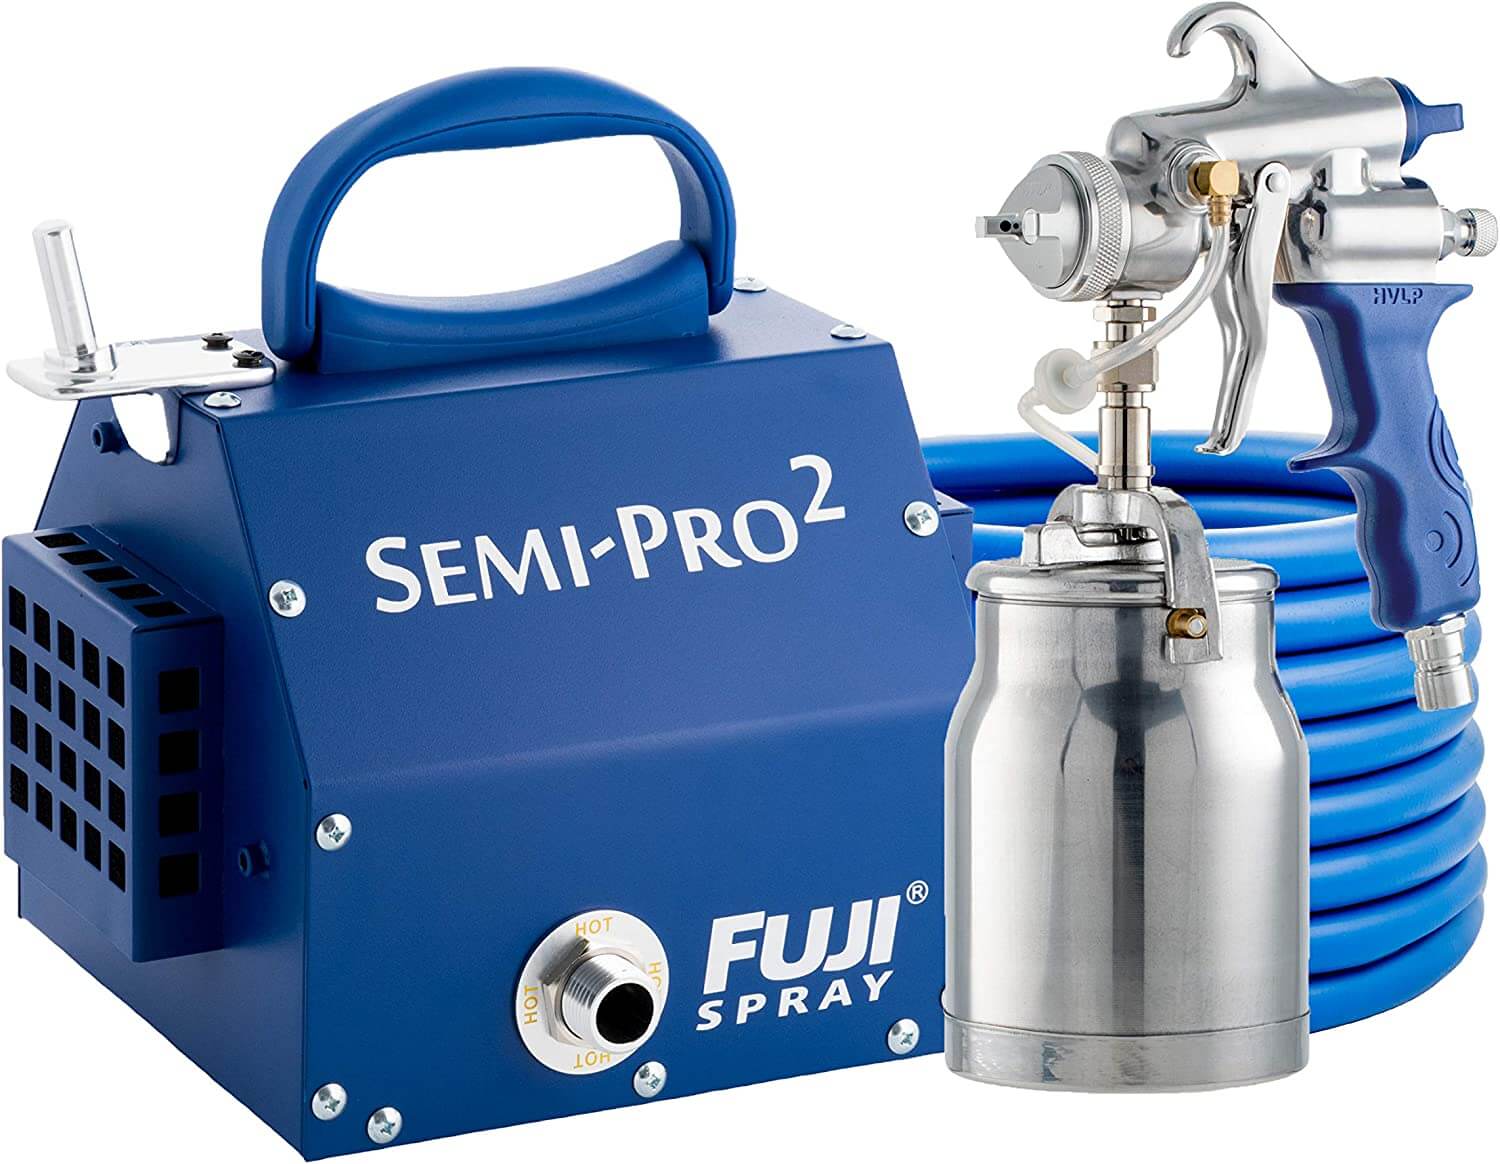 Fuji Spray 2202 Semi-PRO 2 - HVLP Spray System